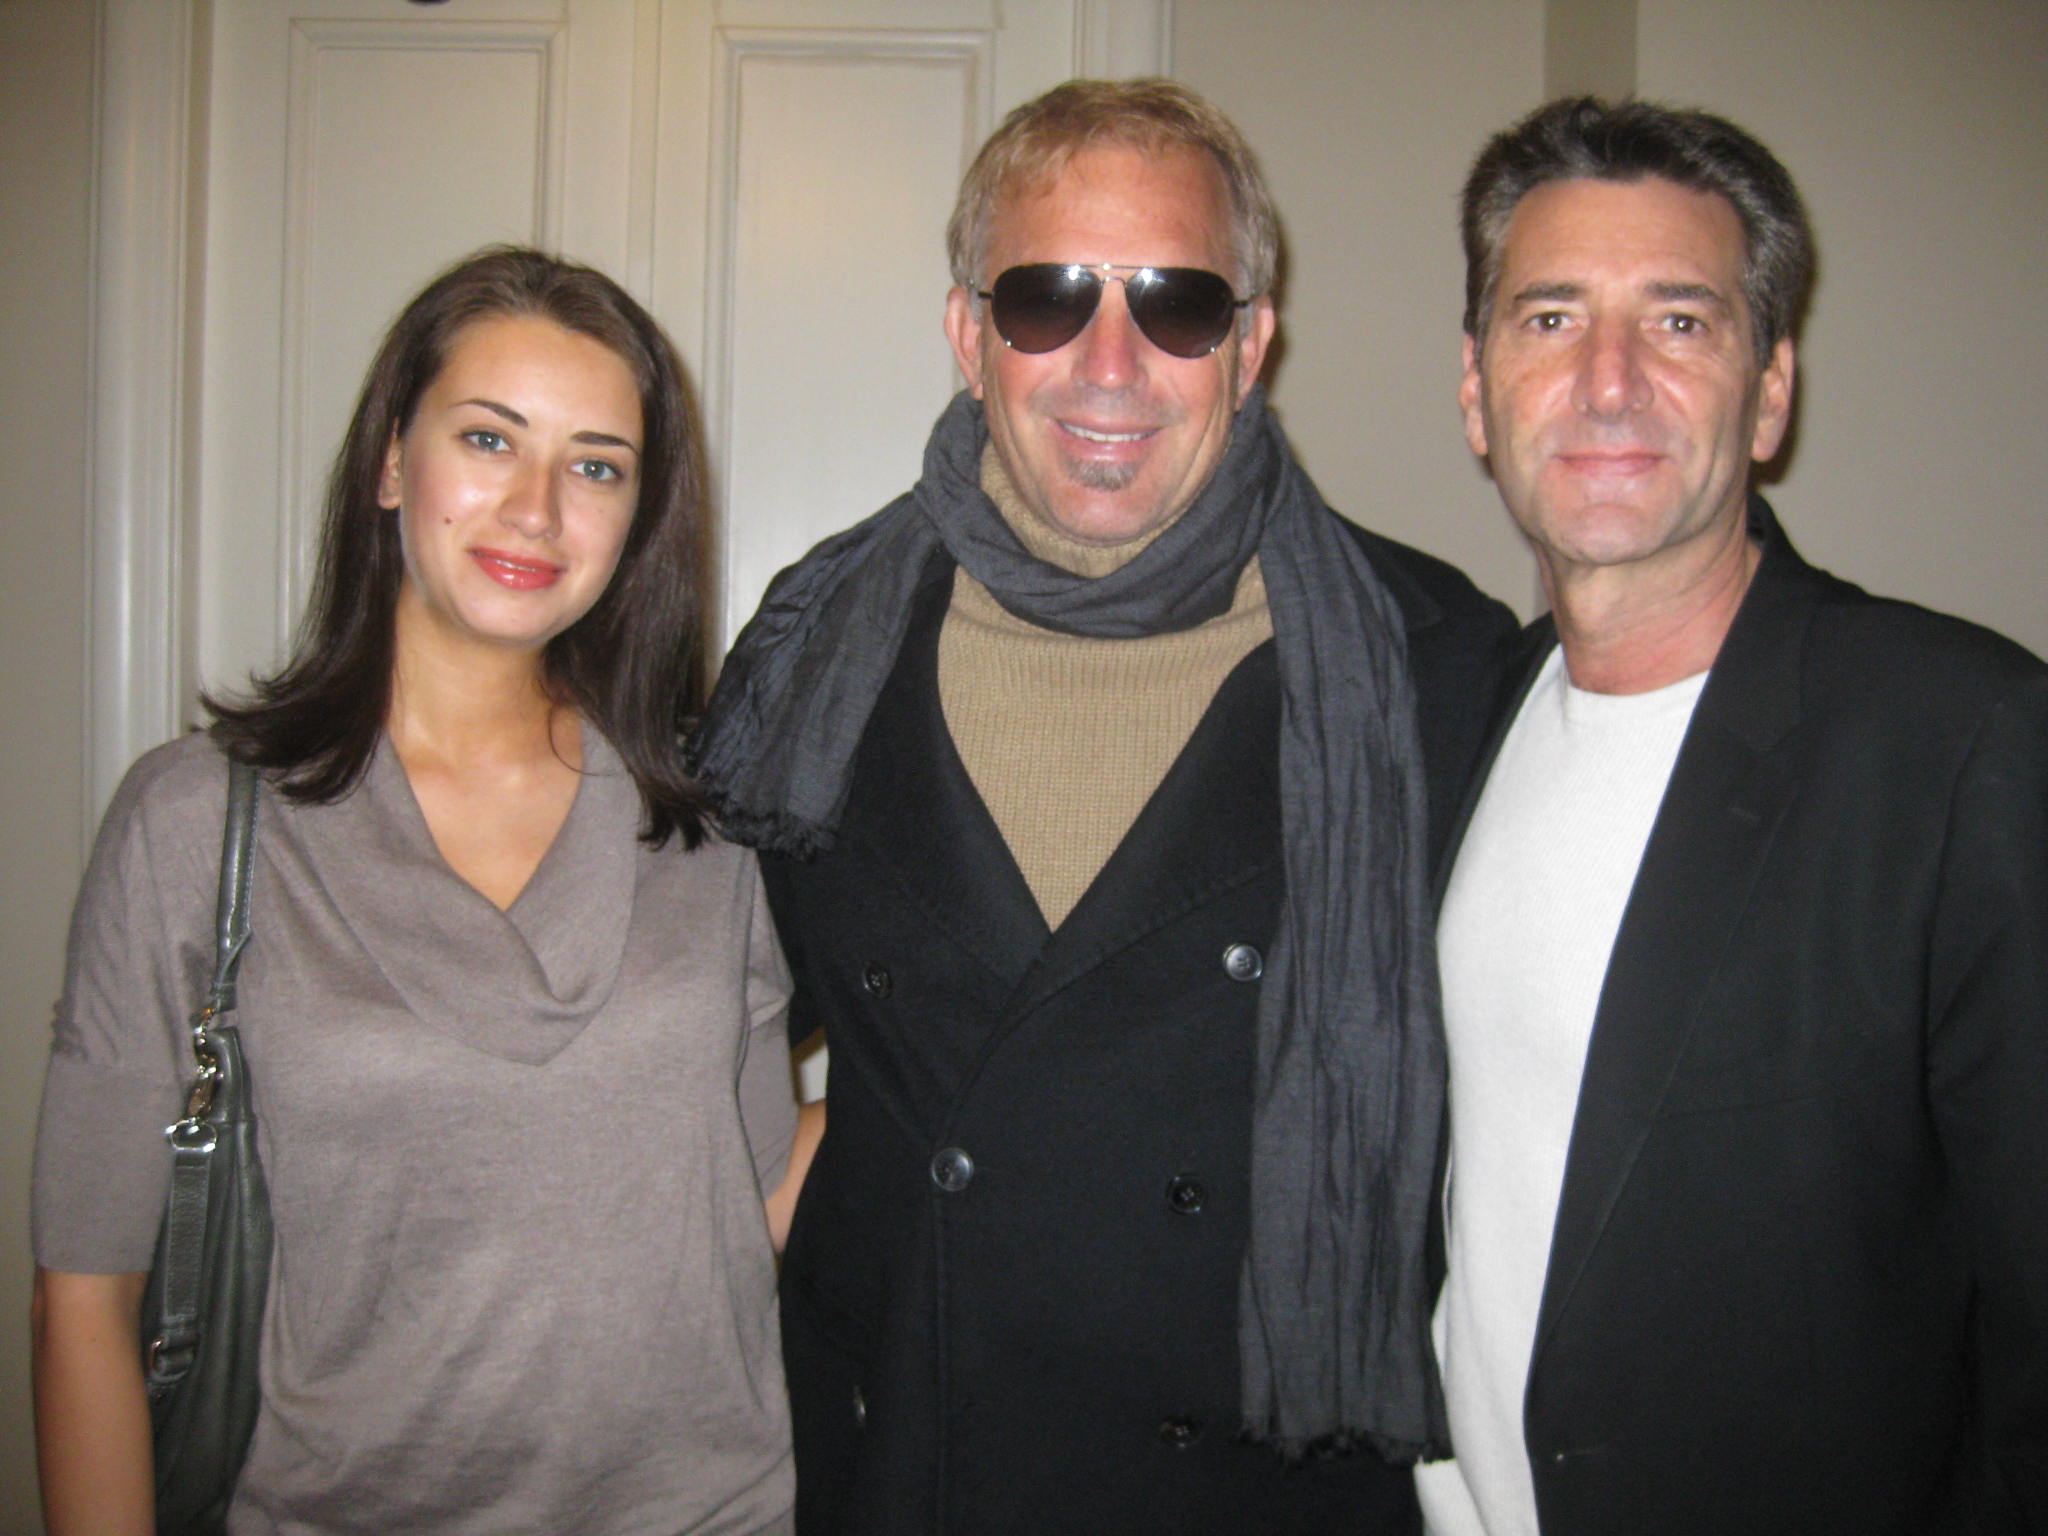 Bob Van Ronkel, Kevin Costner and Marsha Legostayeva in Saint Petersburg, Russia.